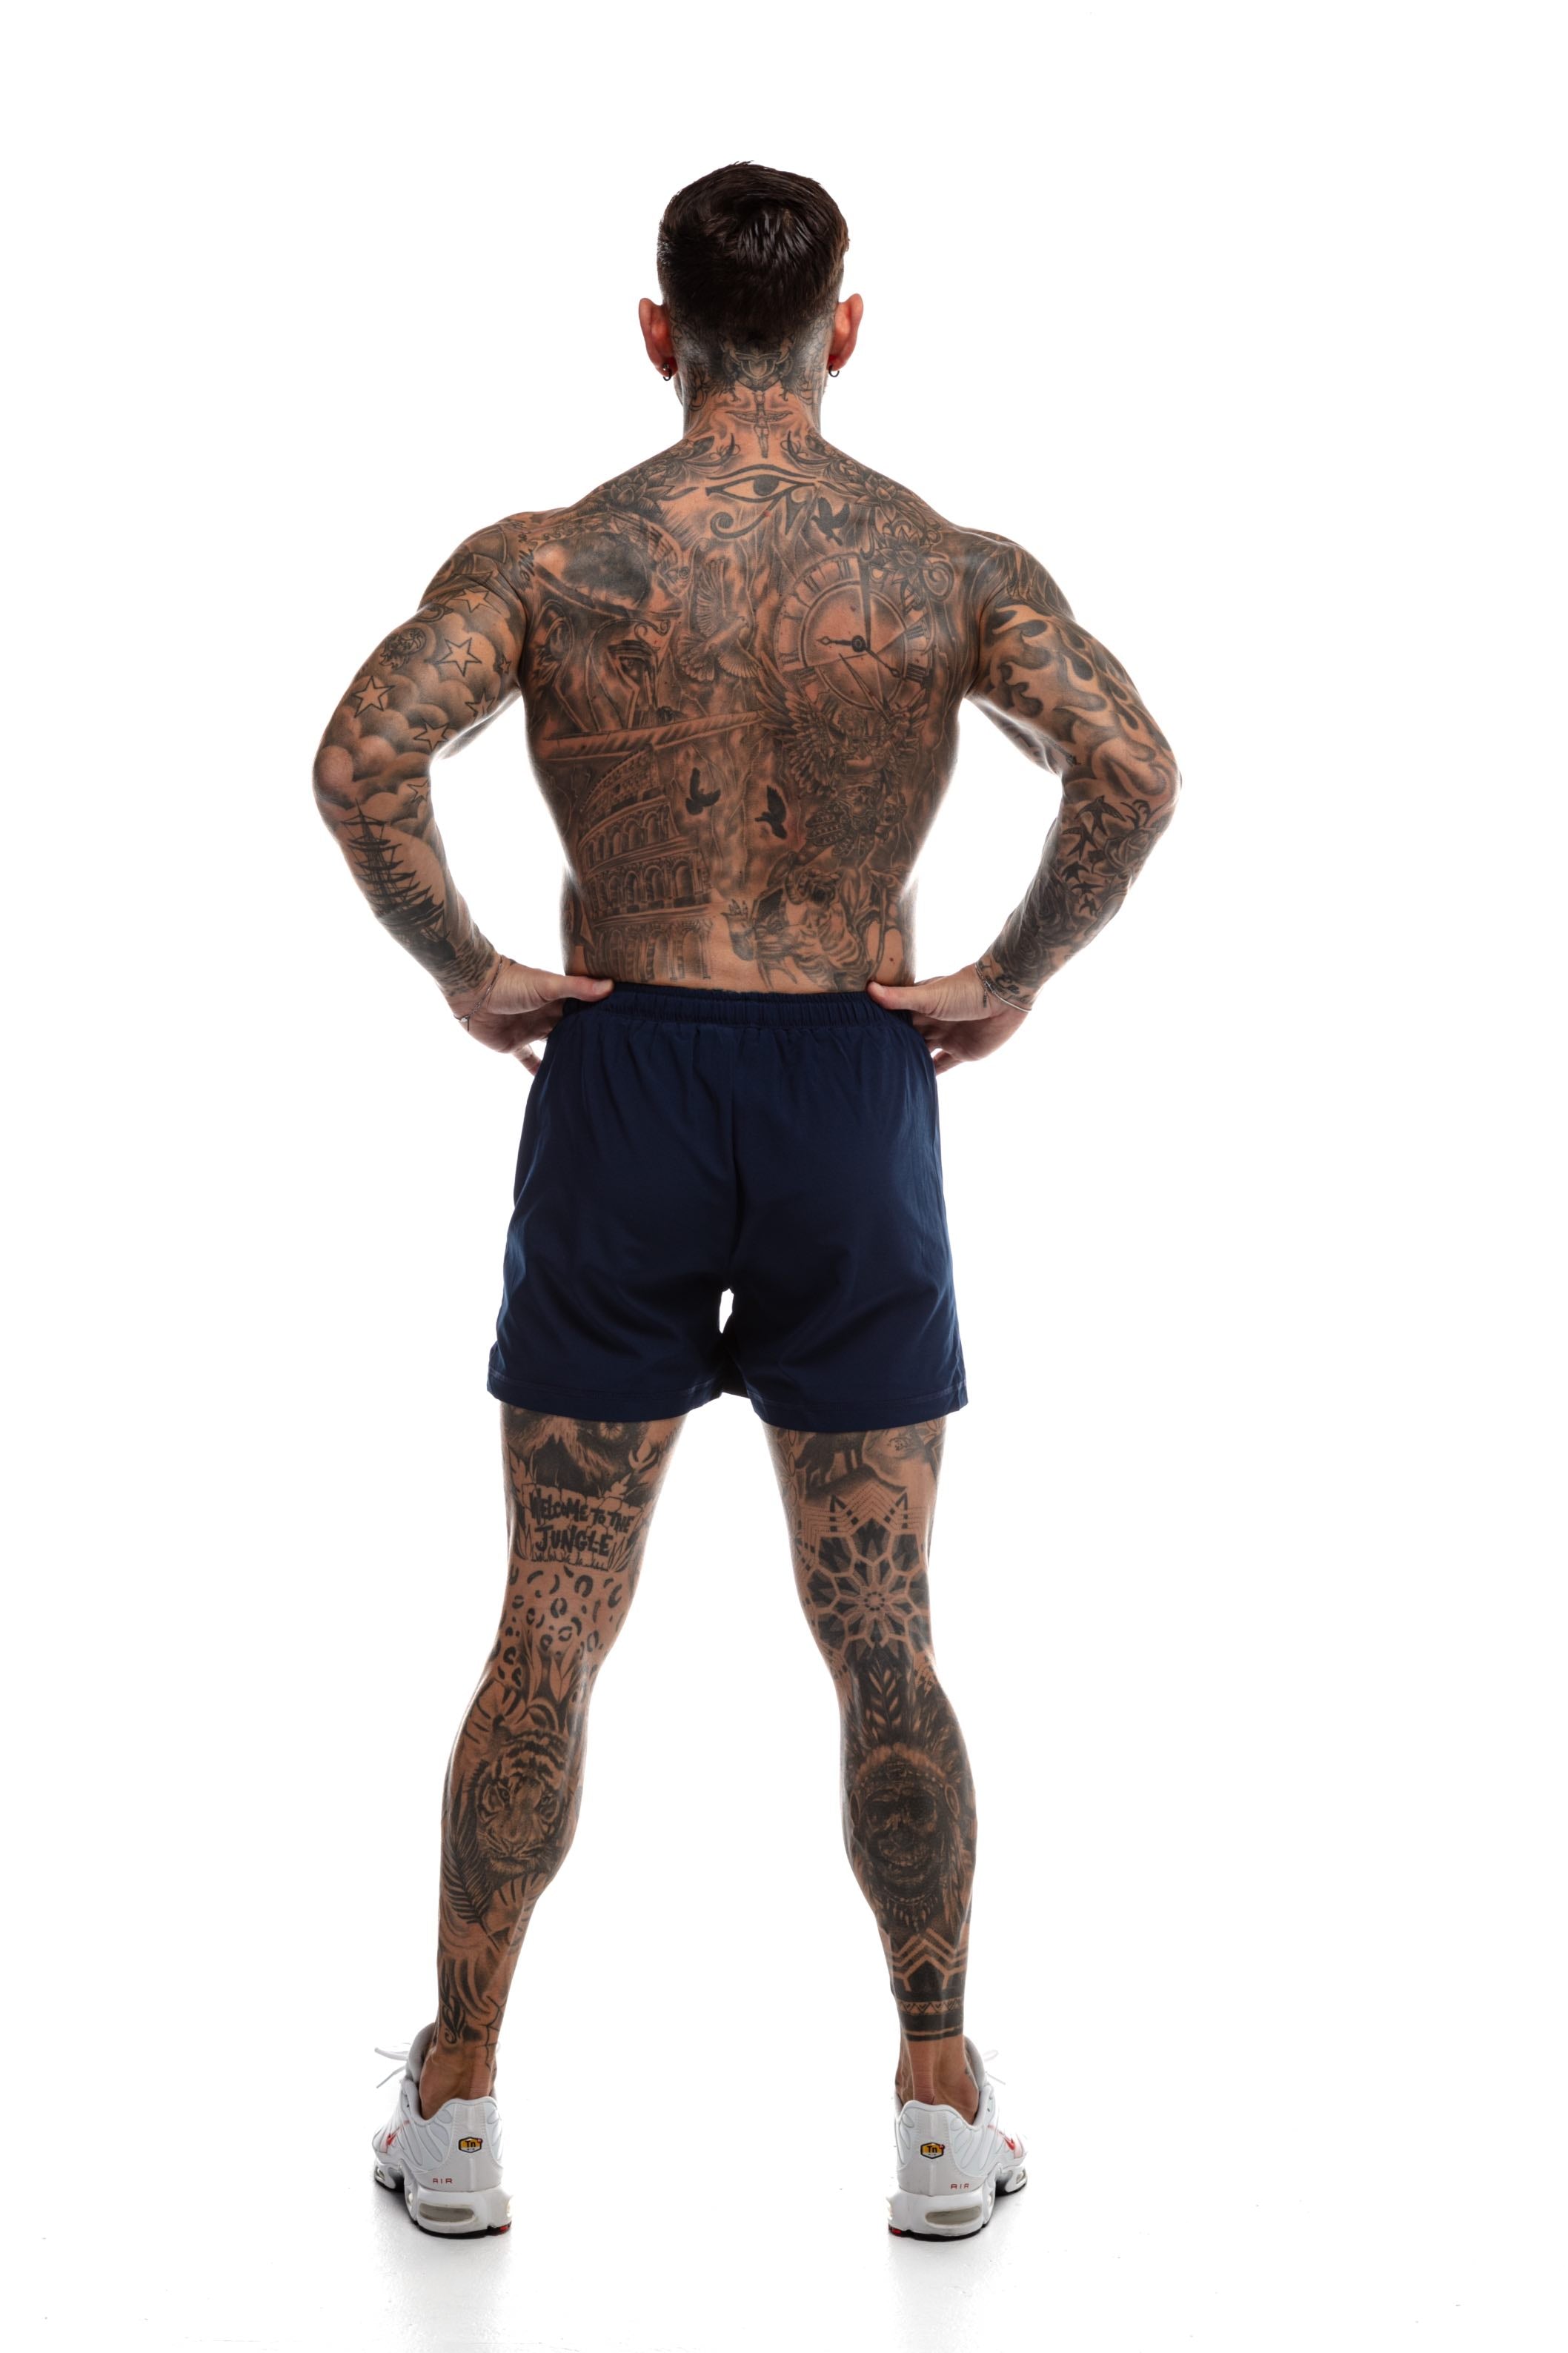 GymFreak Mens 365 Shorts - Navy Blue - 3.5inch